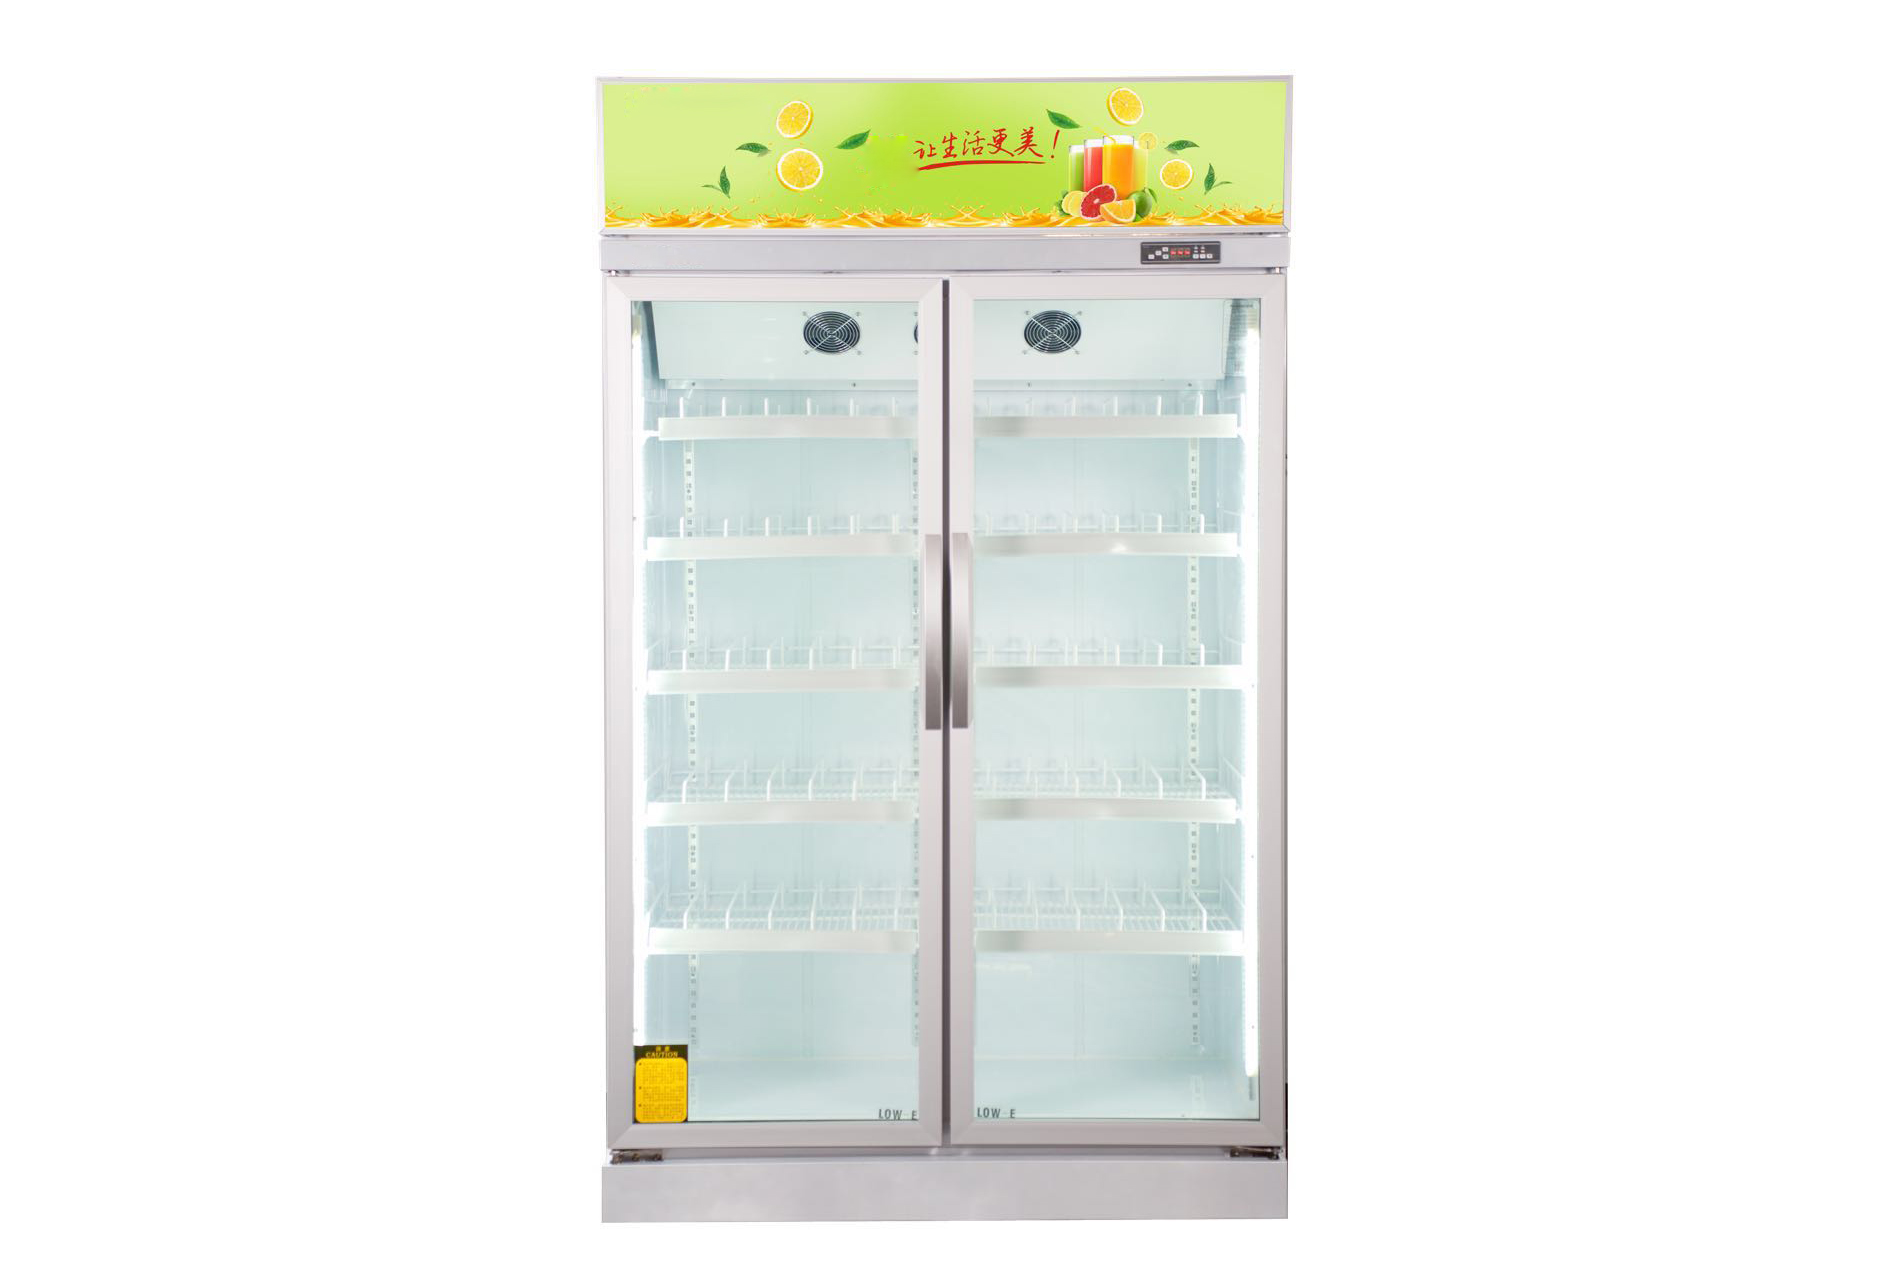 Commercial refrigeration refrigeration process 